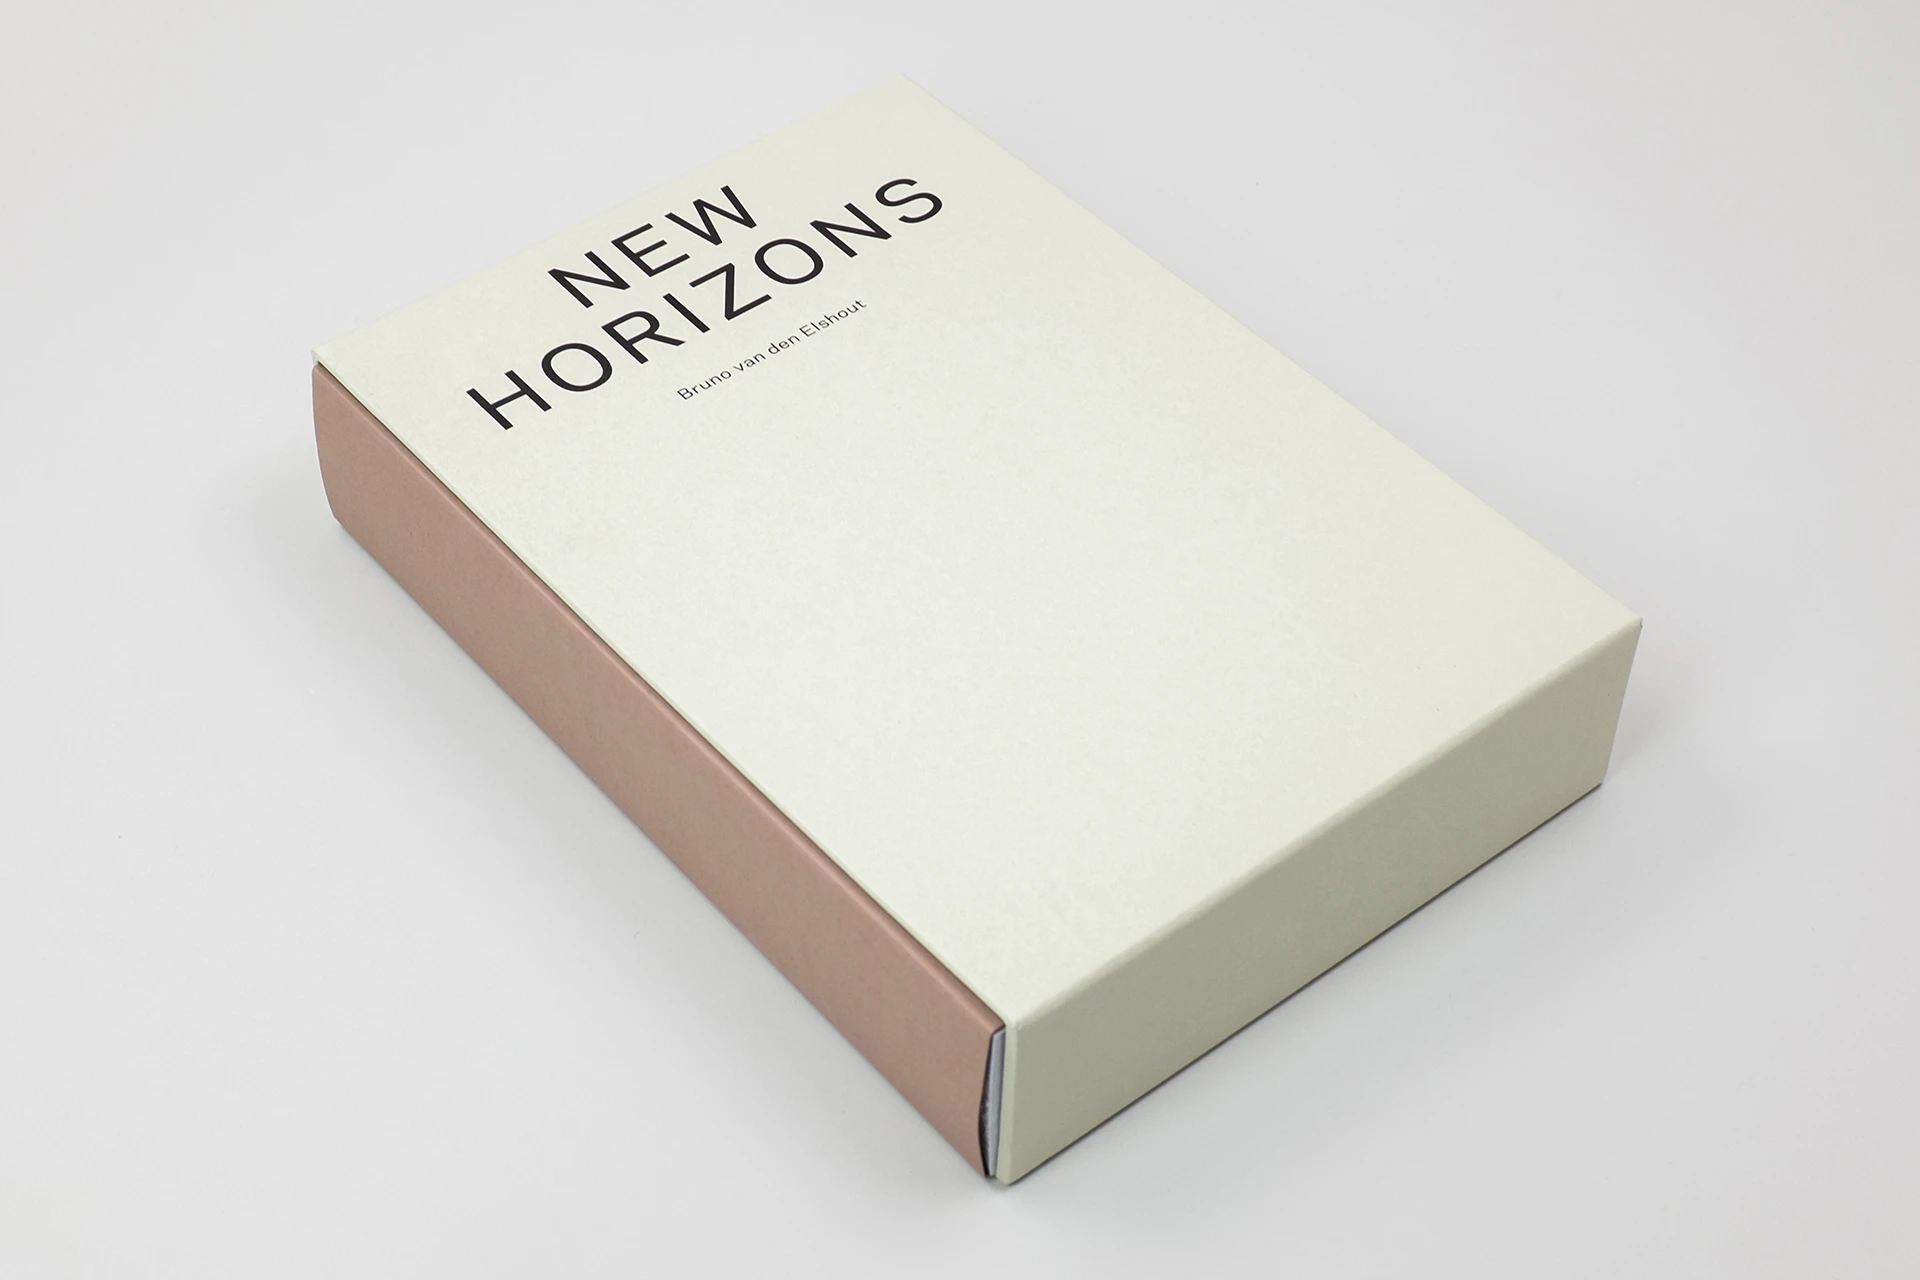 New Horizons - The Eriskay Connection